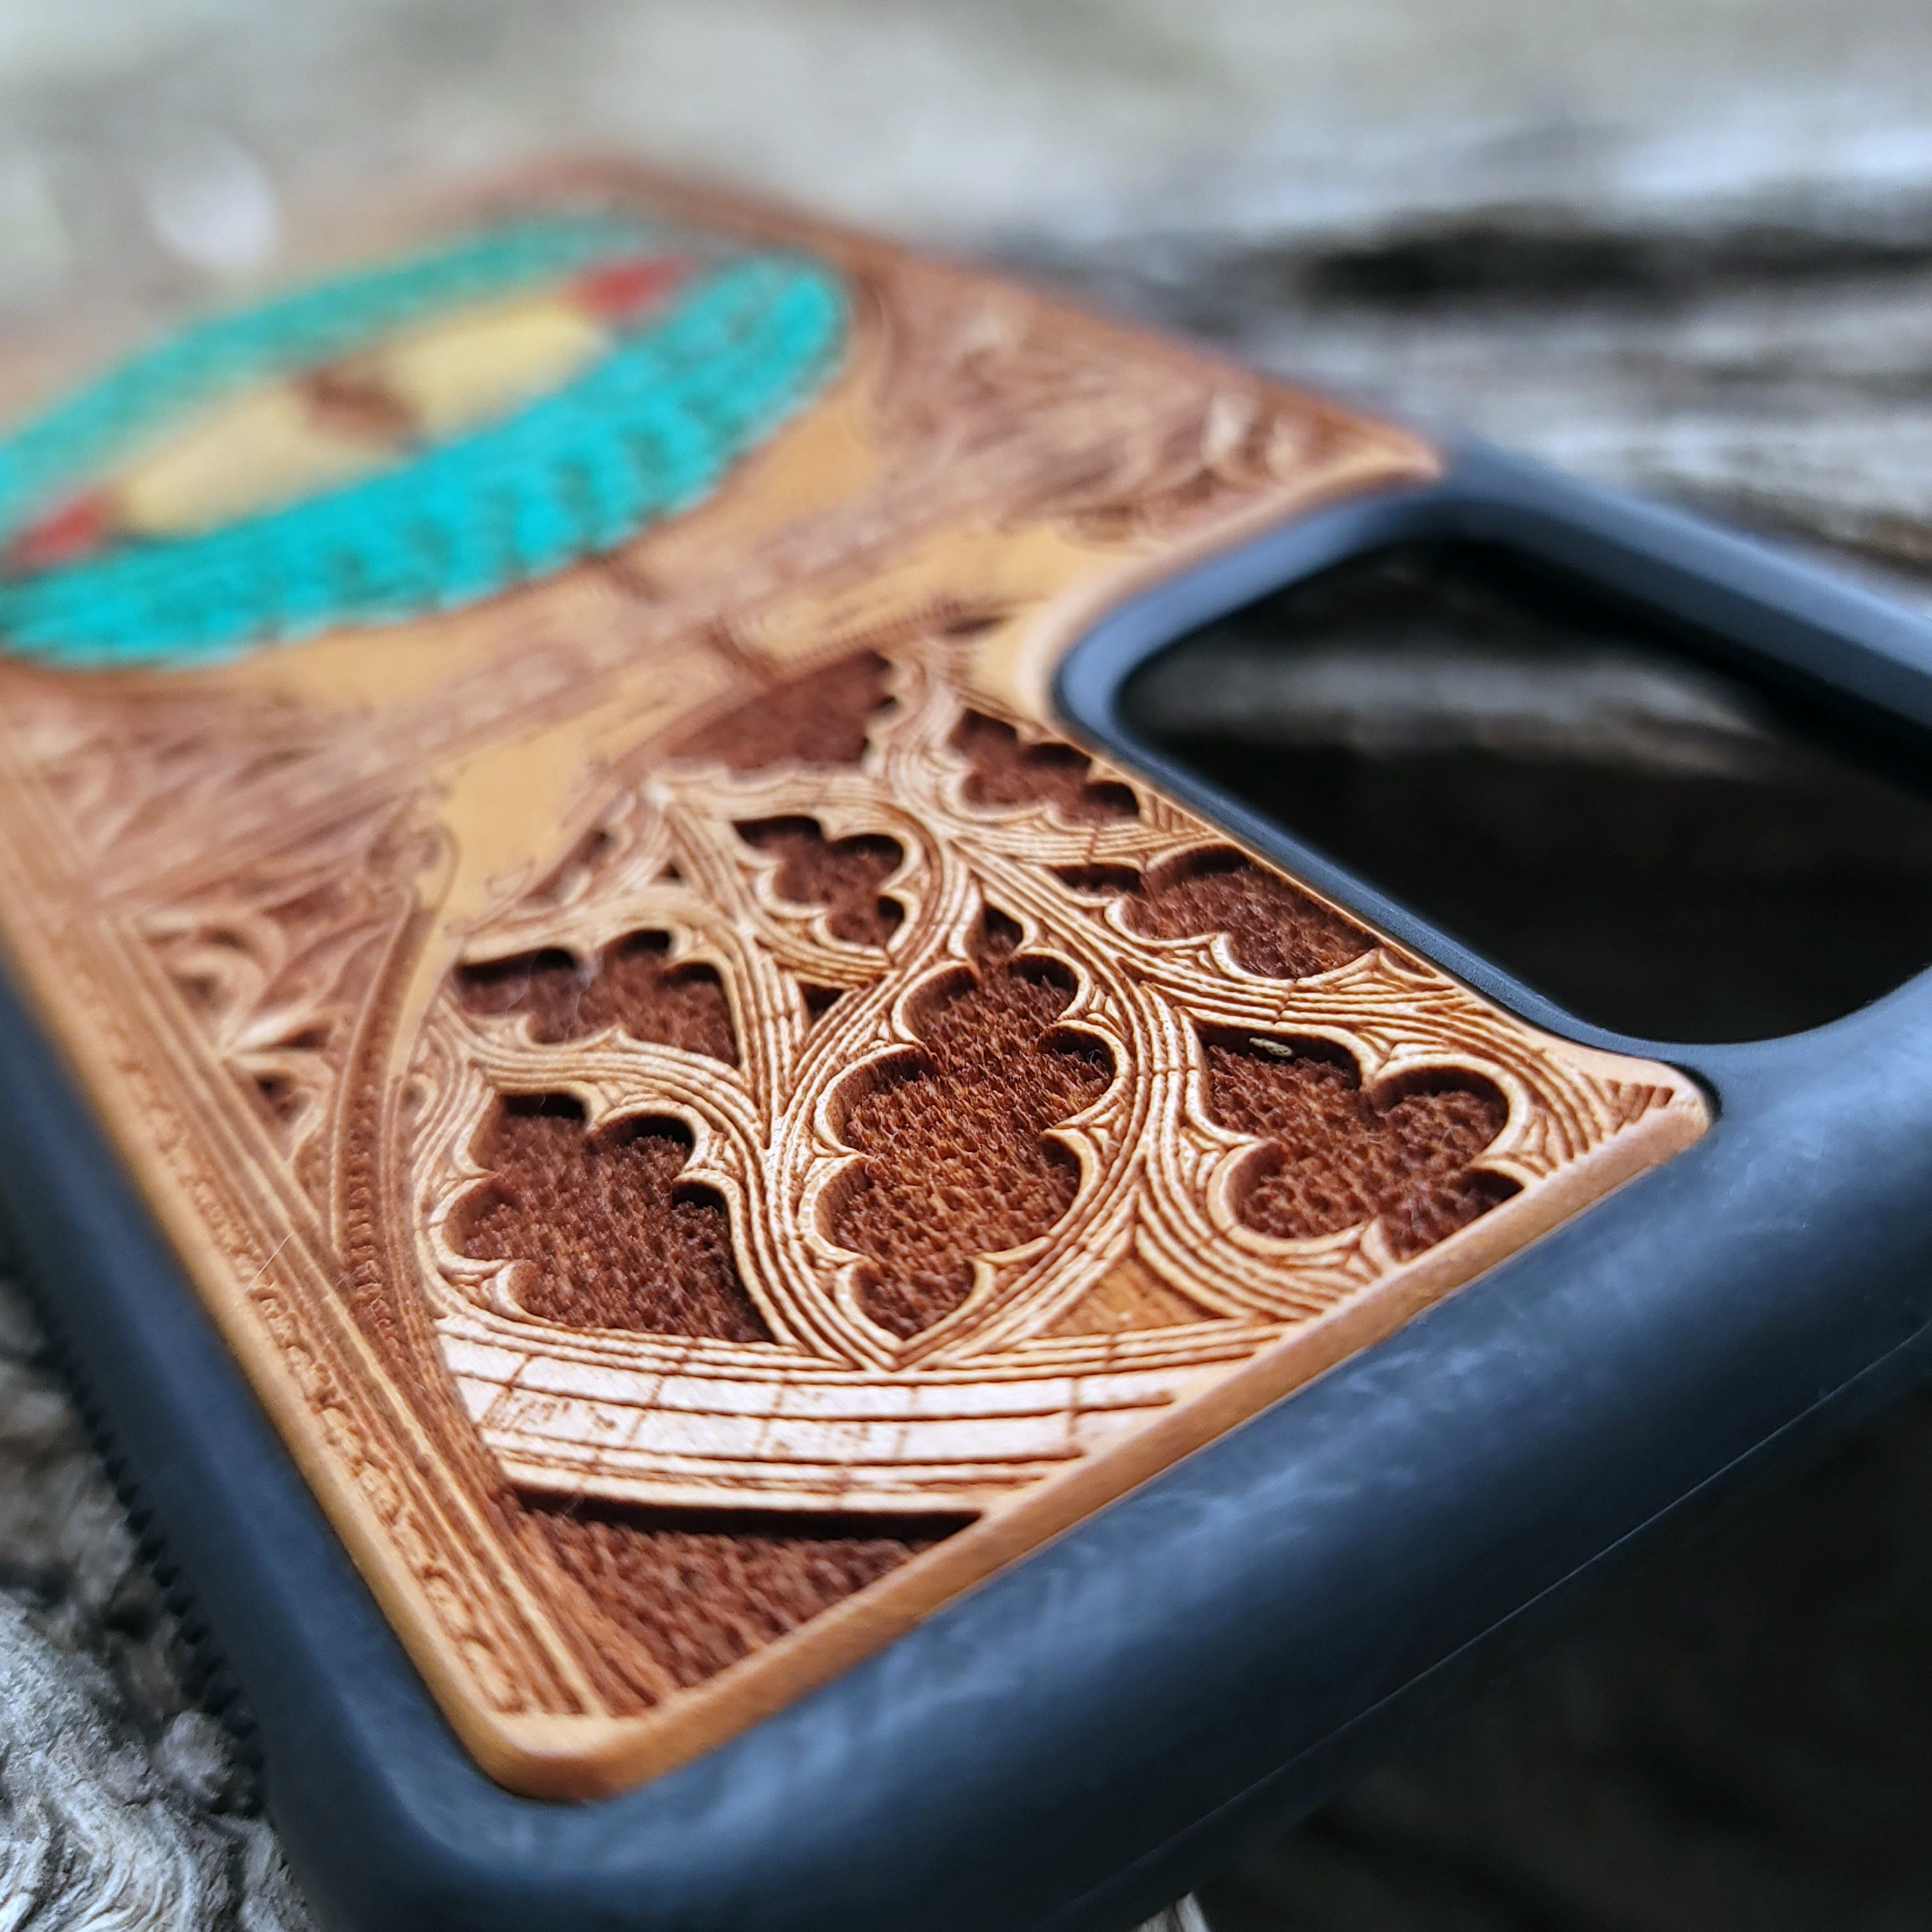 iPhone & Samsung Galaxy Wood Phone Case - Snake Eye Green Reptilian